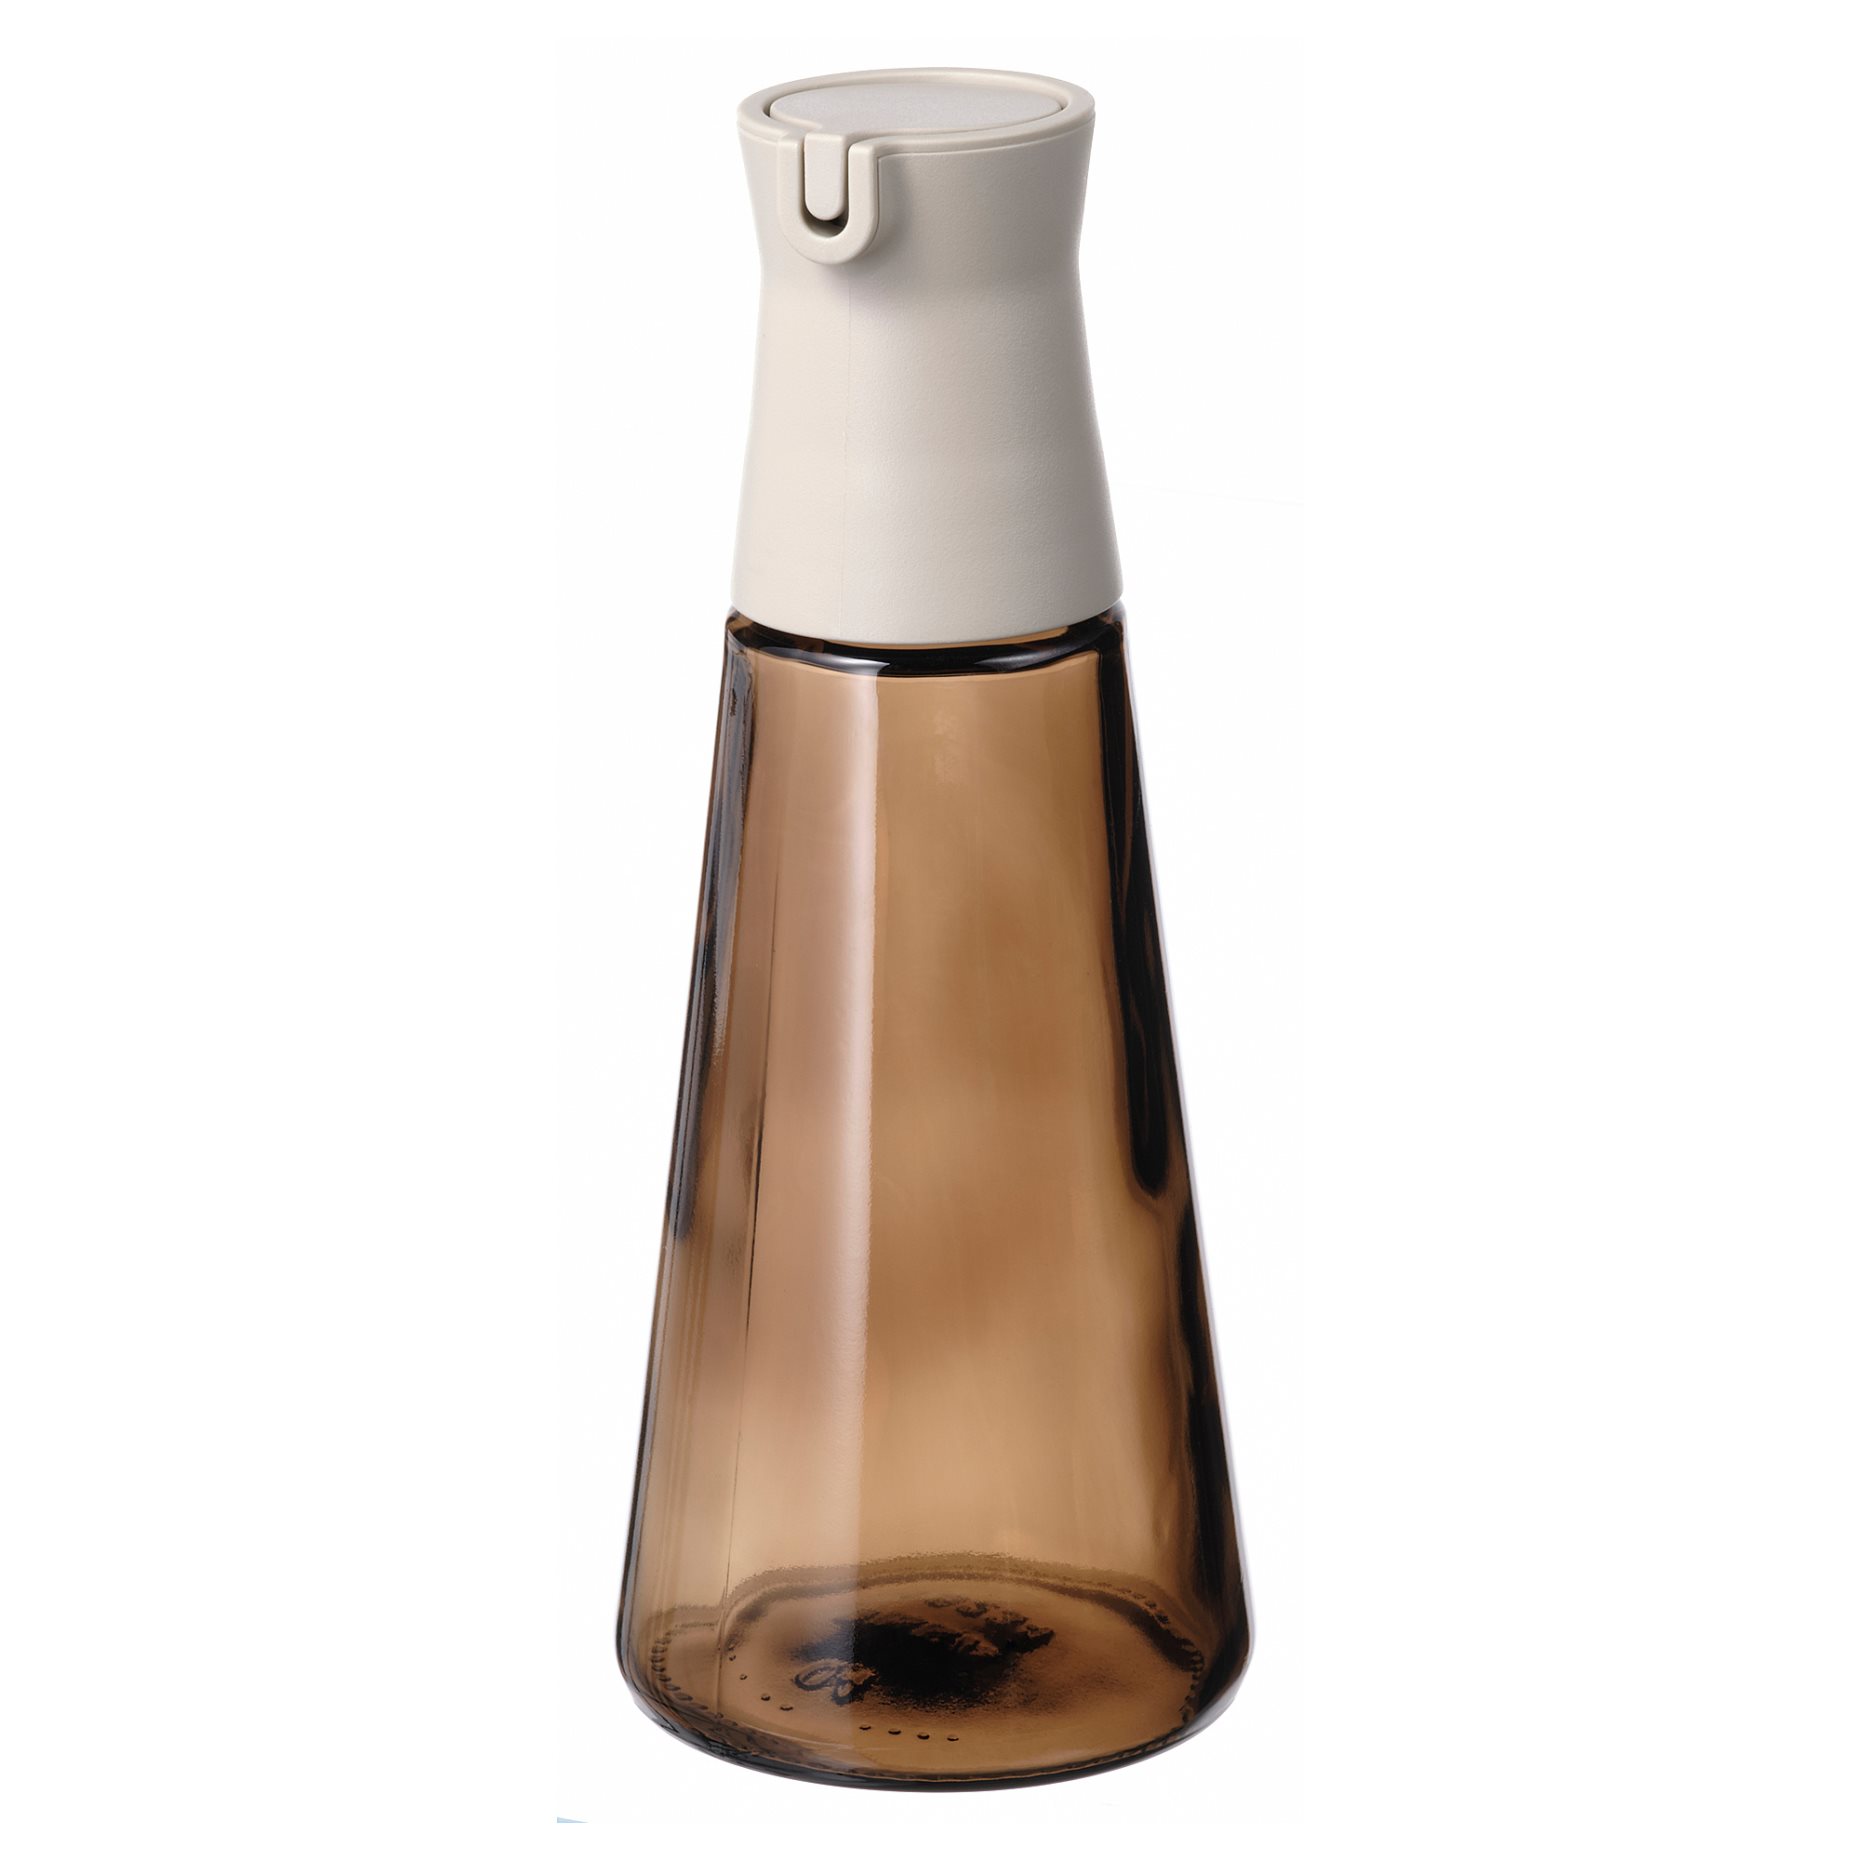 HALVTOM, μπουκάλι με στόμιο σερβιρίσματος/γυαλί, 19 cm, 005.234.62